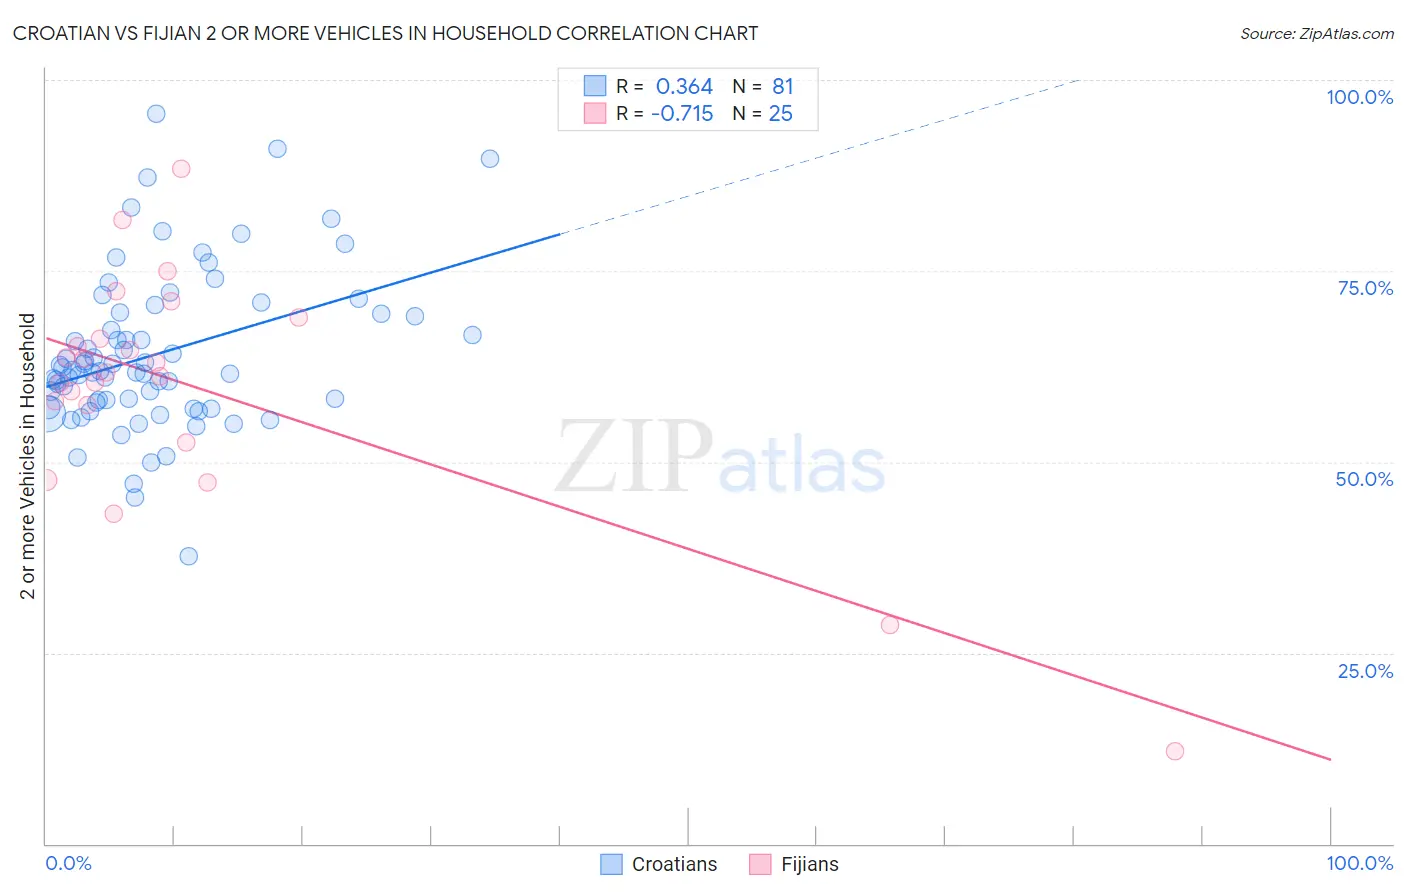 Croatian vs Fijian 2 or more Vehicles in Household